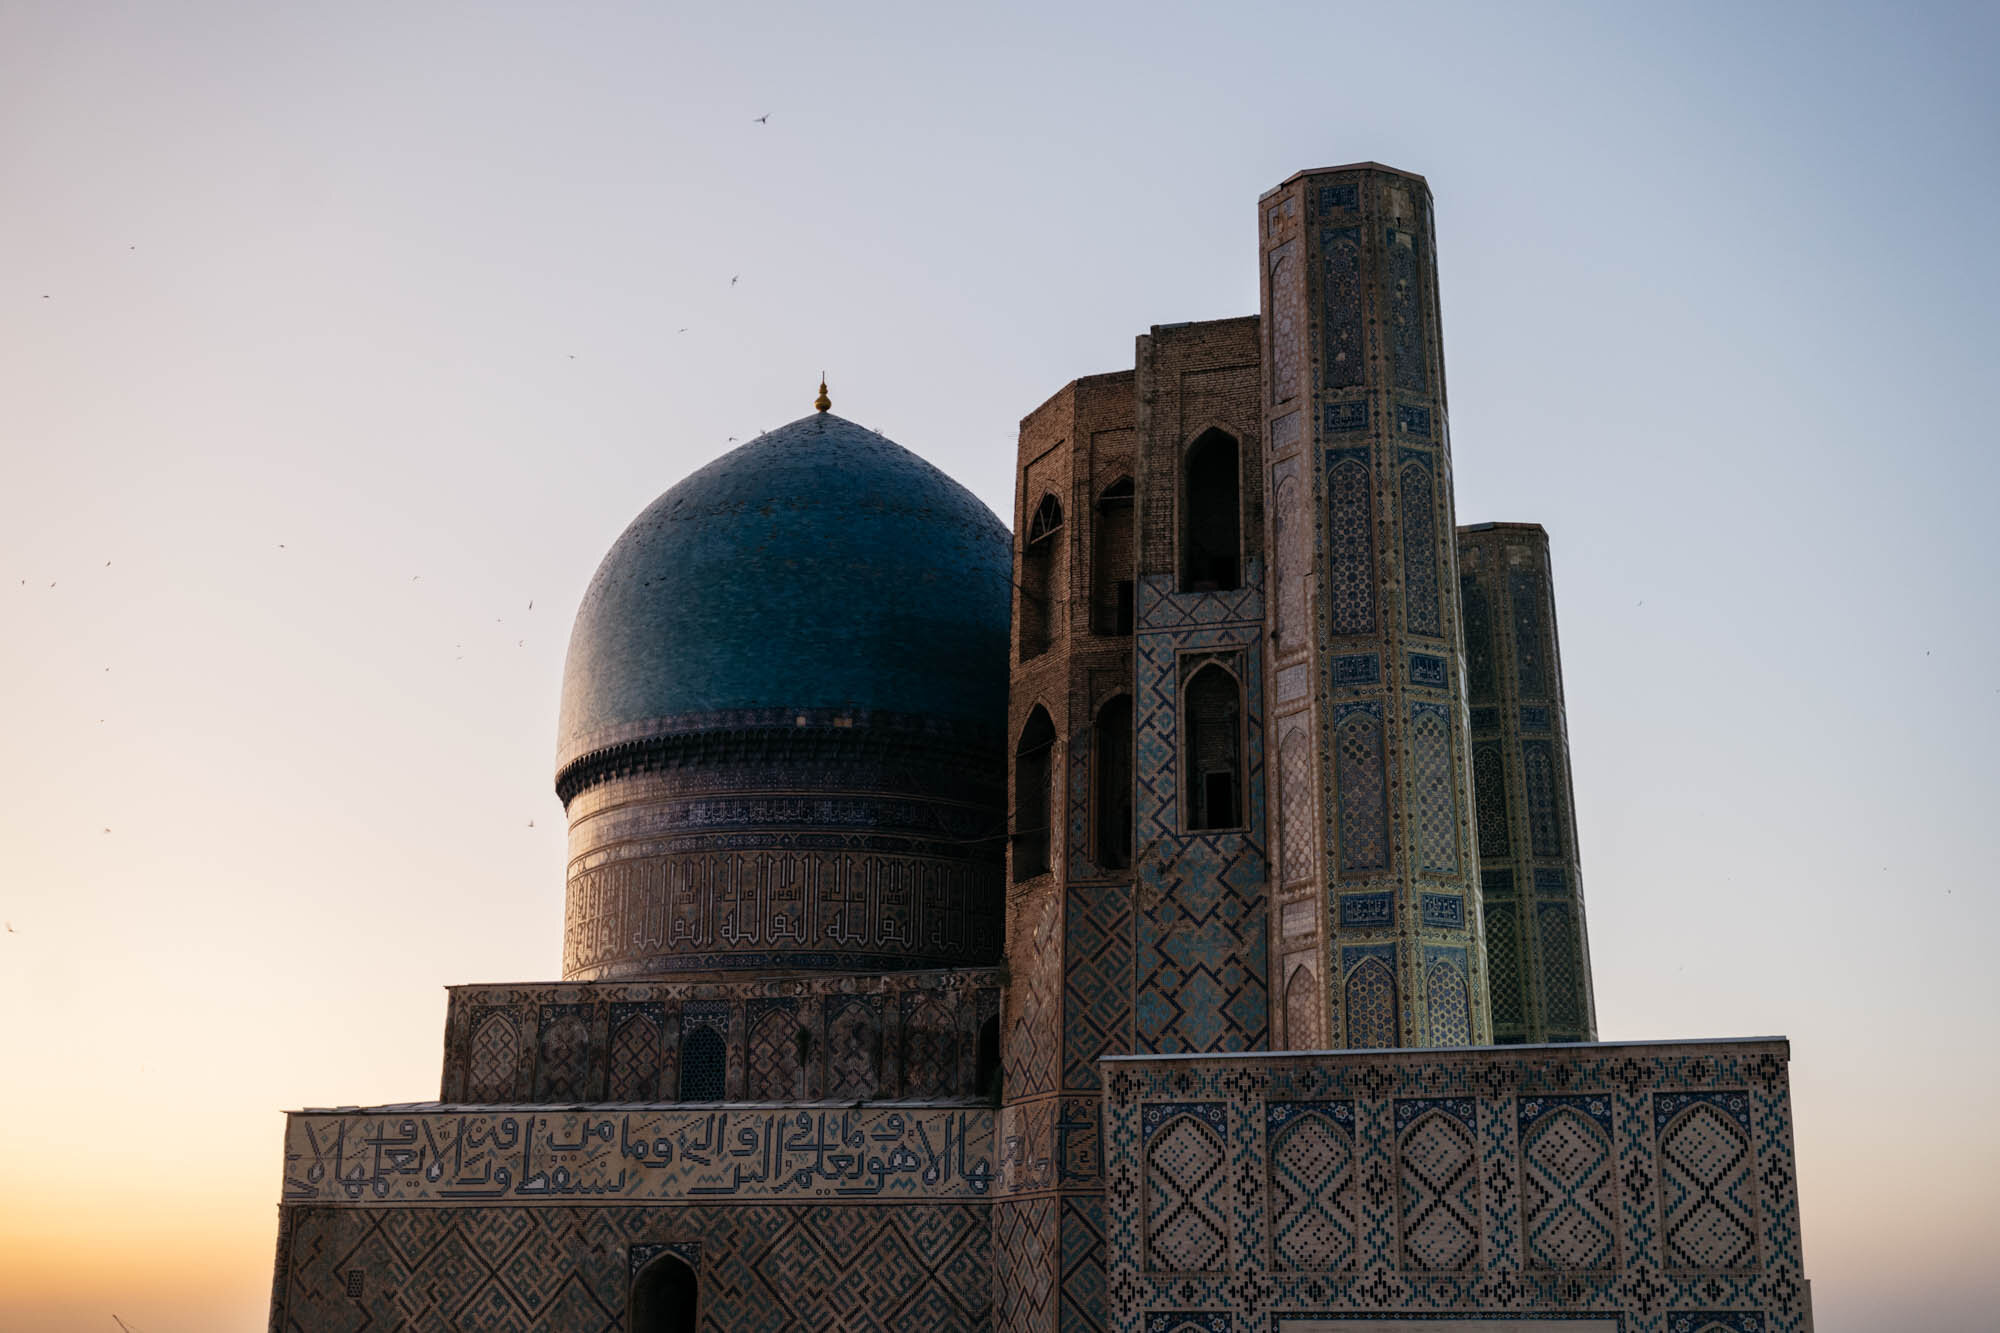  The Bibi-Khanym Mosque at dusk, Samarkand 